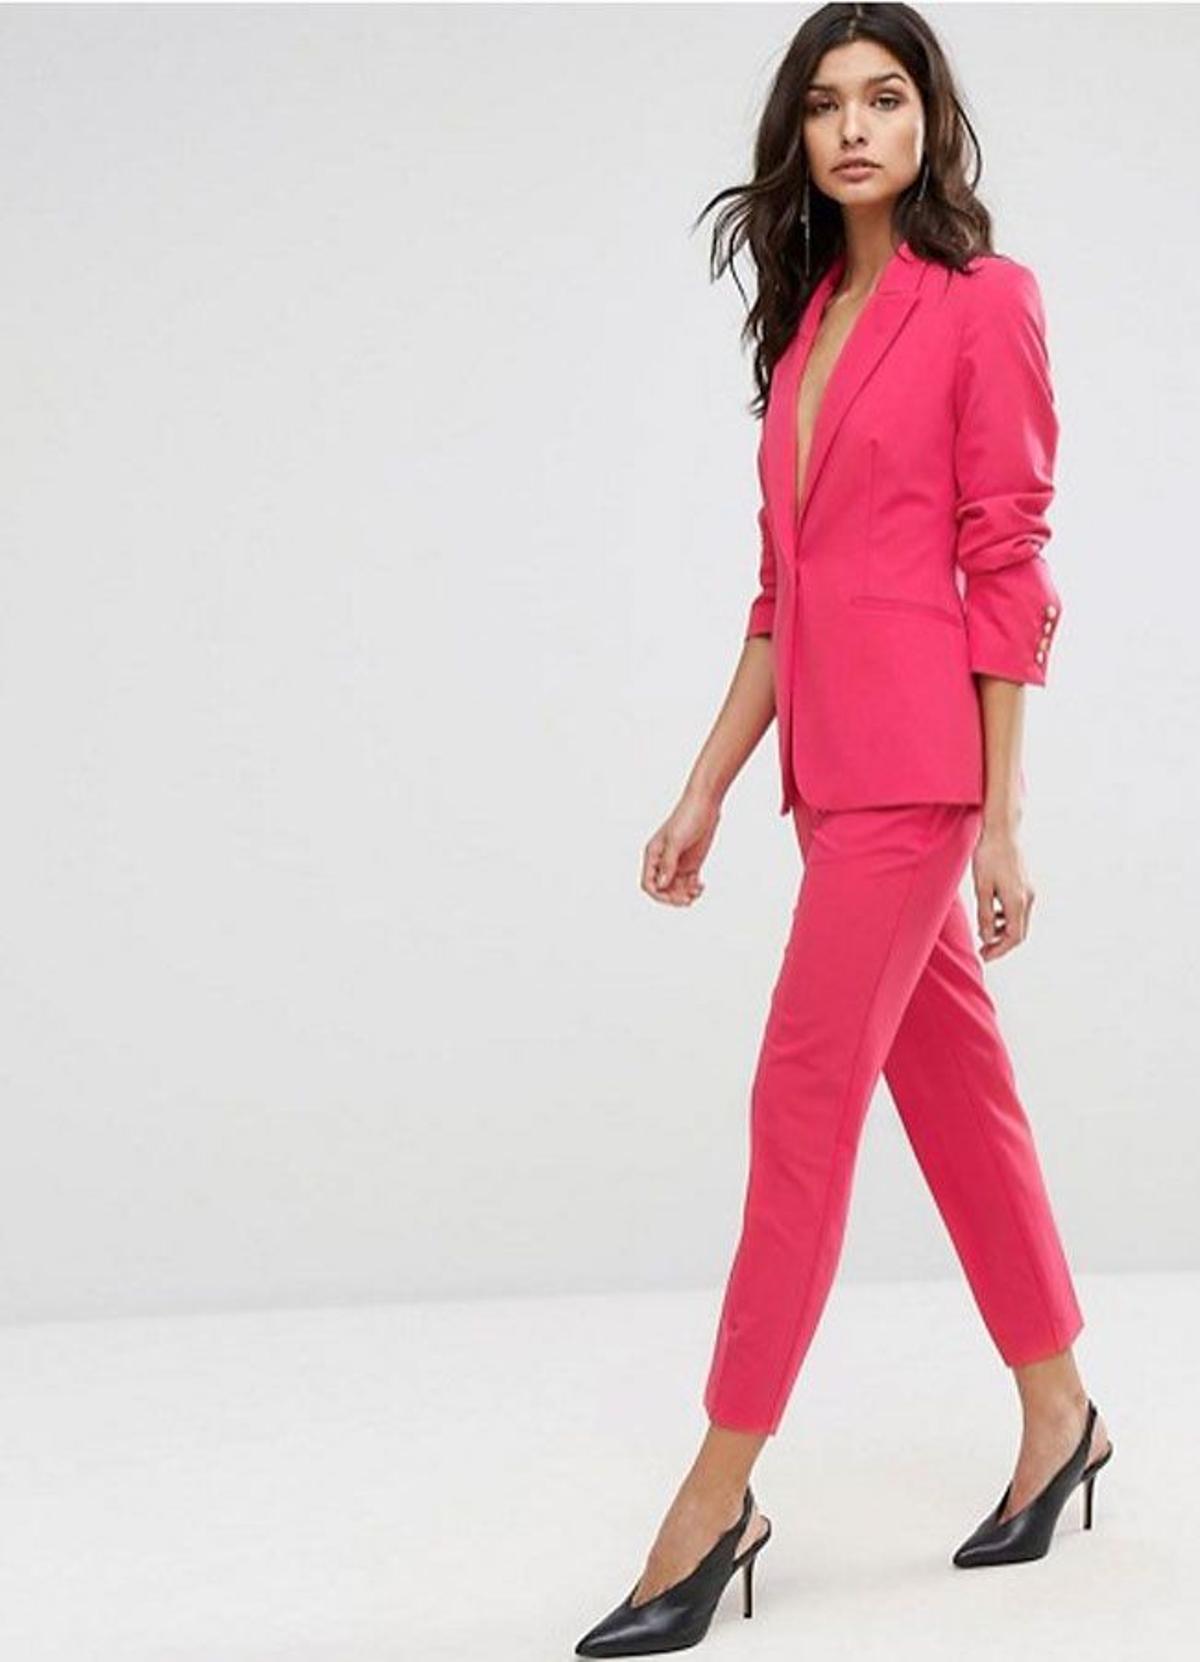 Trajes de chaqueta rosas: de Asos, en tono flúor